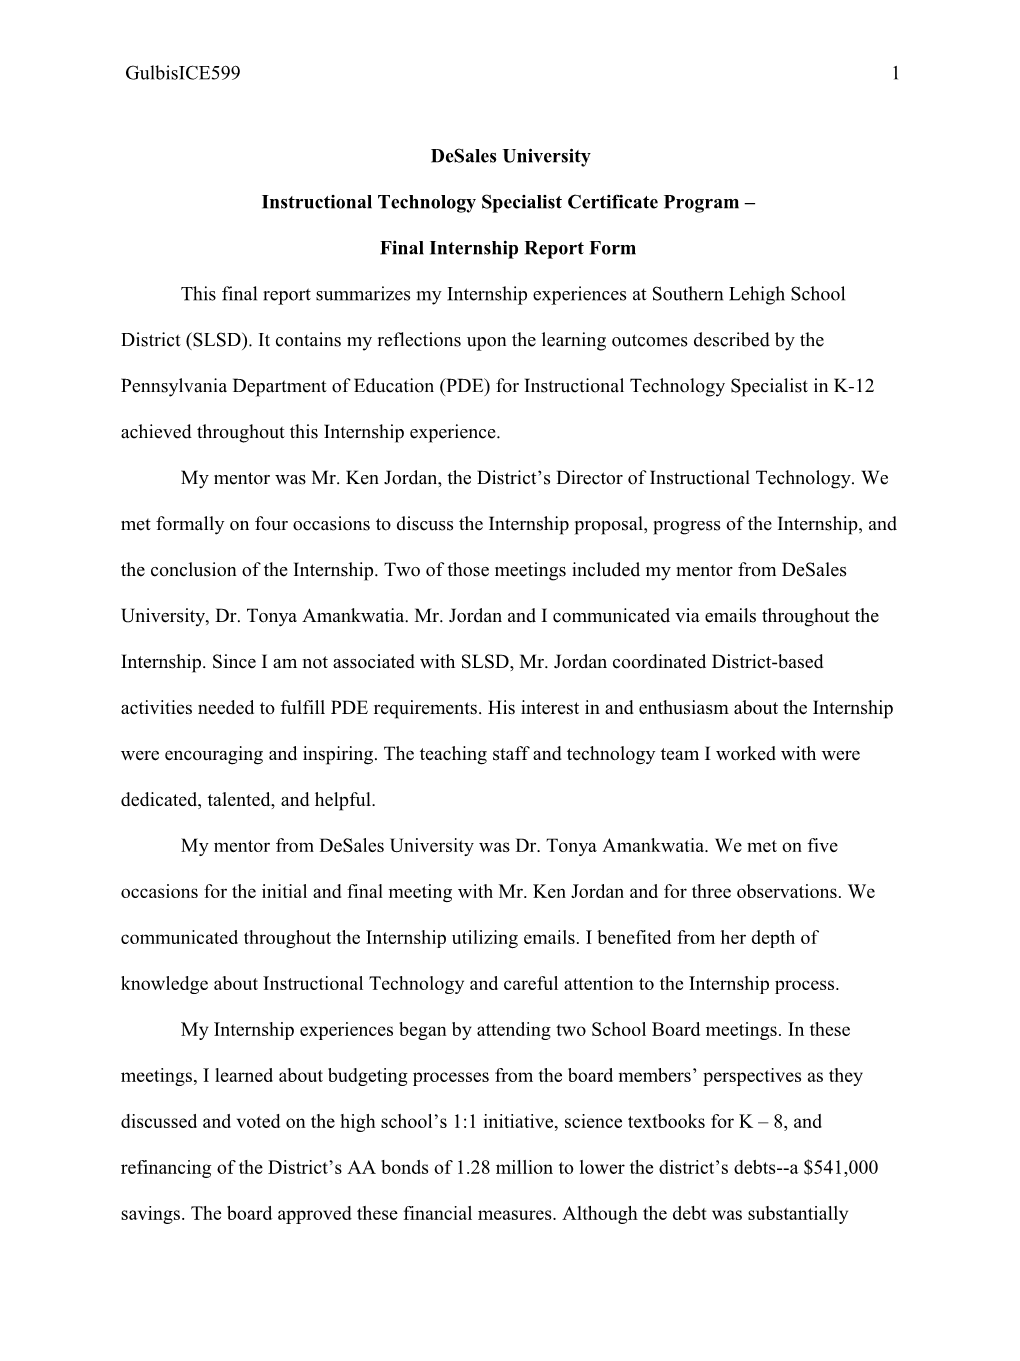 Instructional Technology Specialist Certificate Program